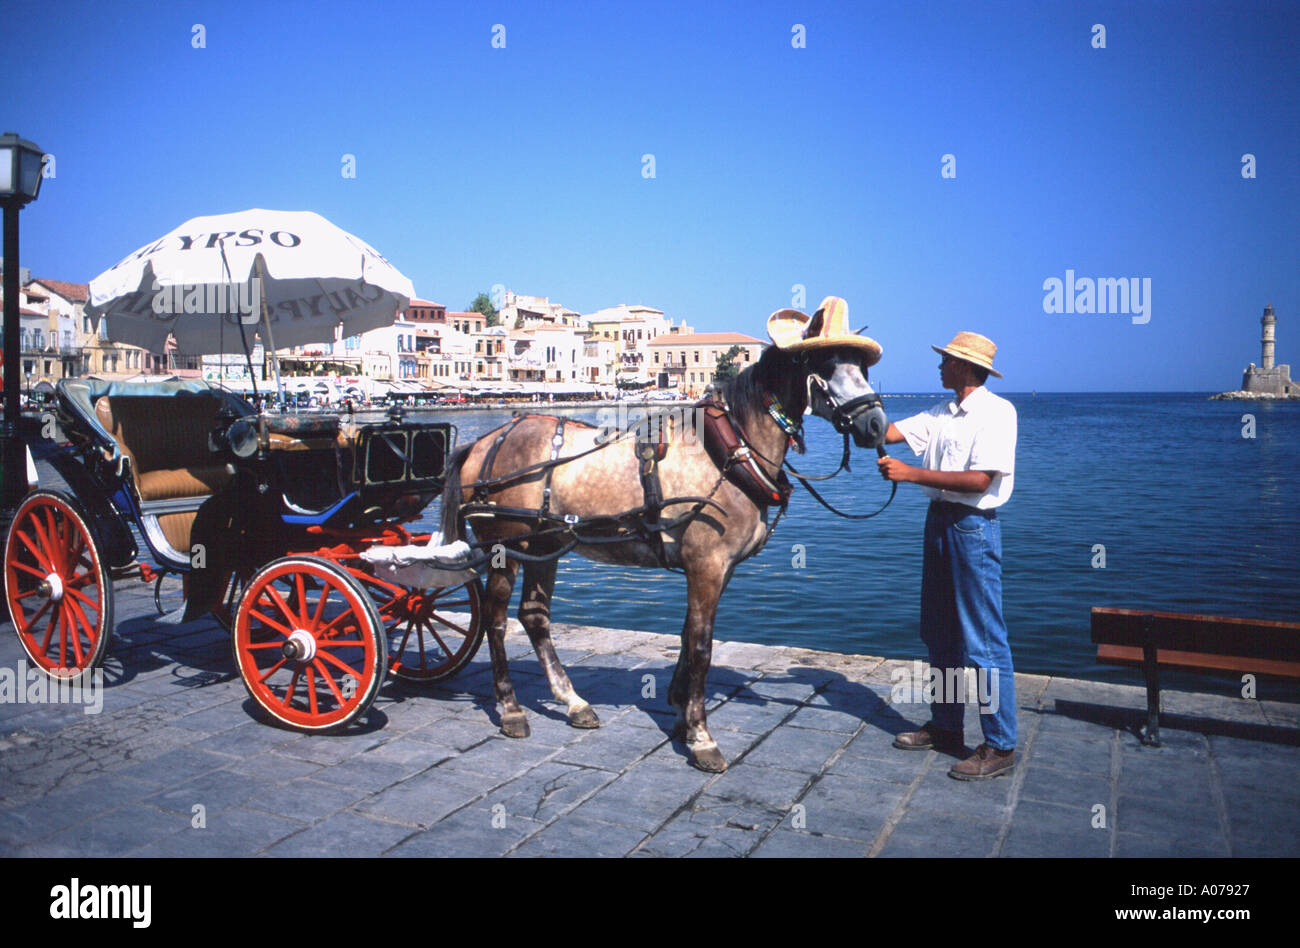 Standing in Line Horse Drawn Carriage Chania Xania Harbour Harbor Crete Greek Island Eu European Union EEC Greece Europe Stock Photo